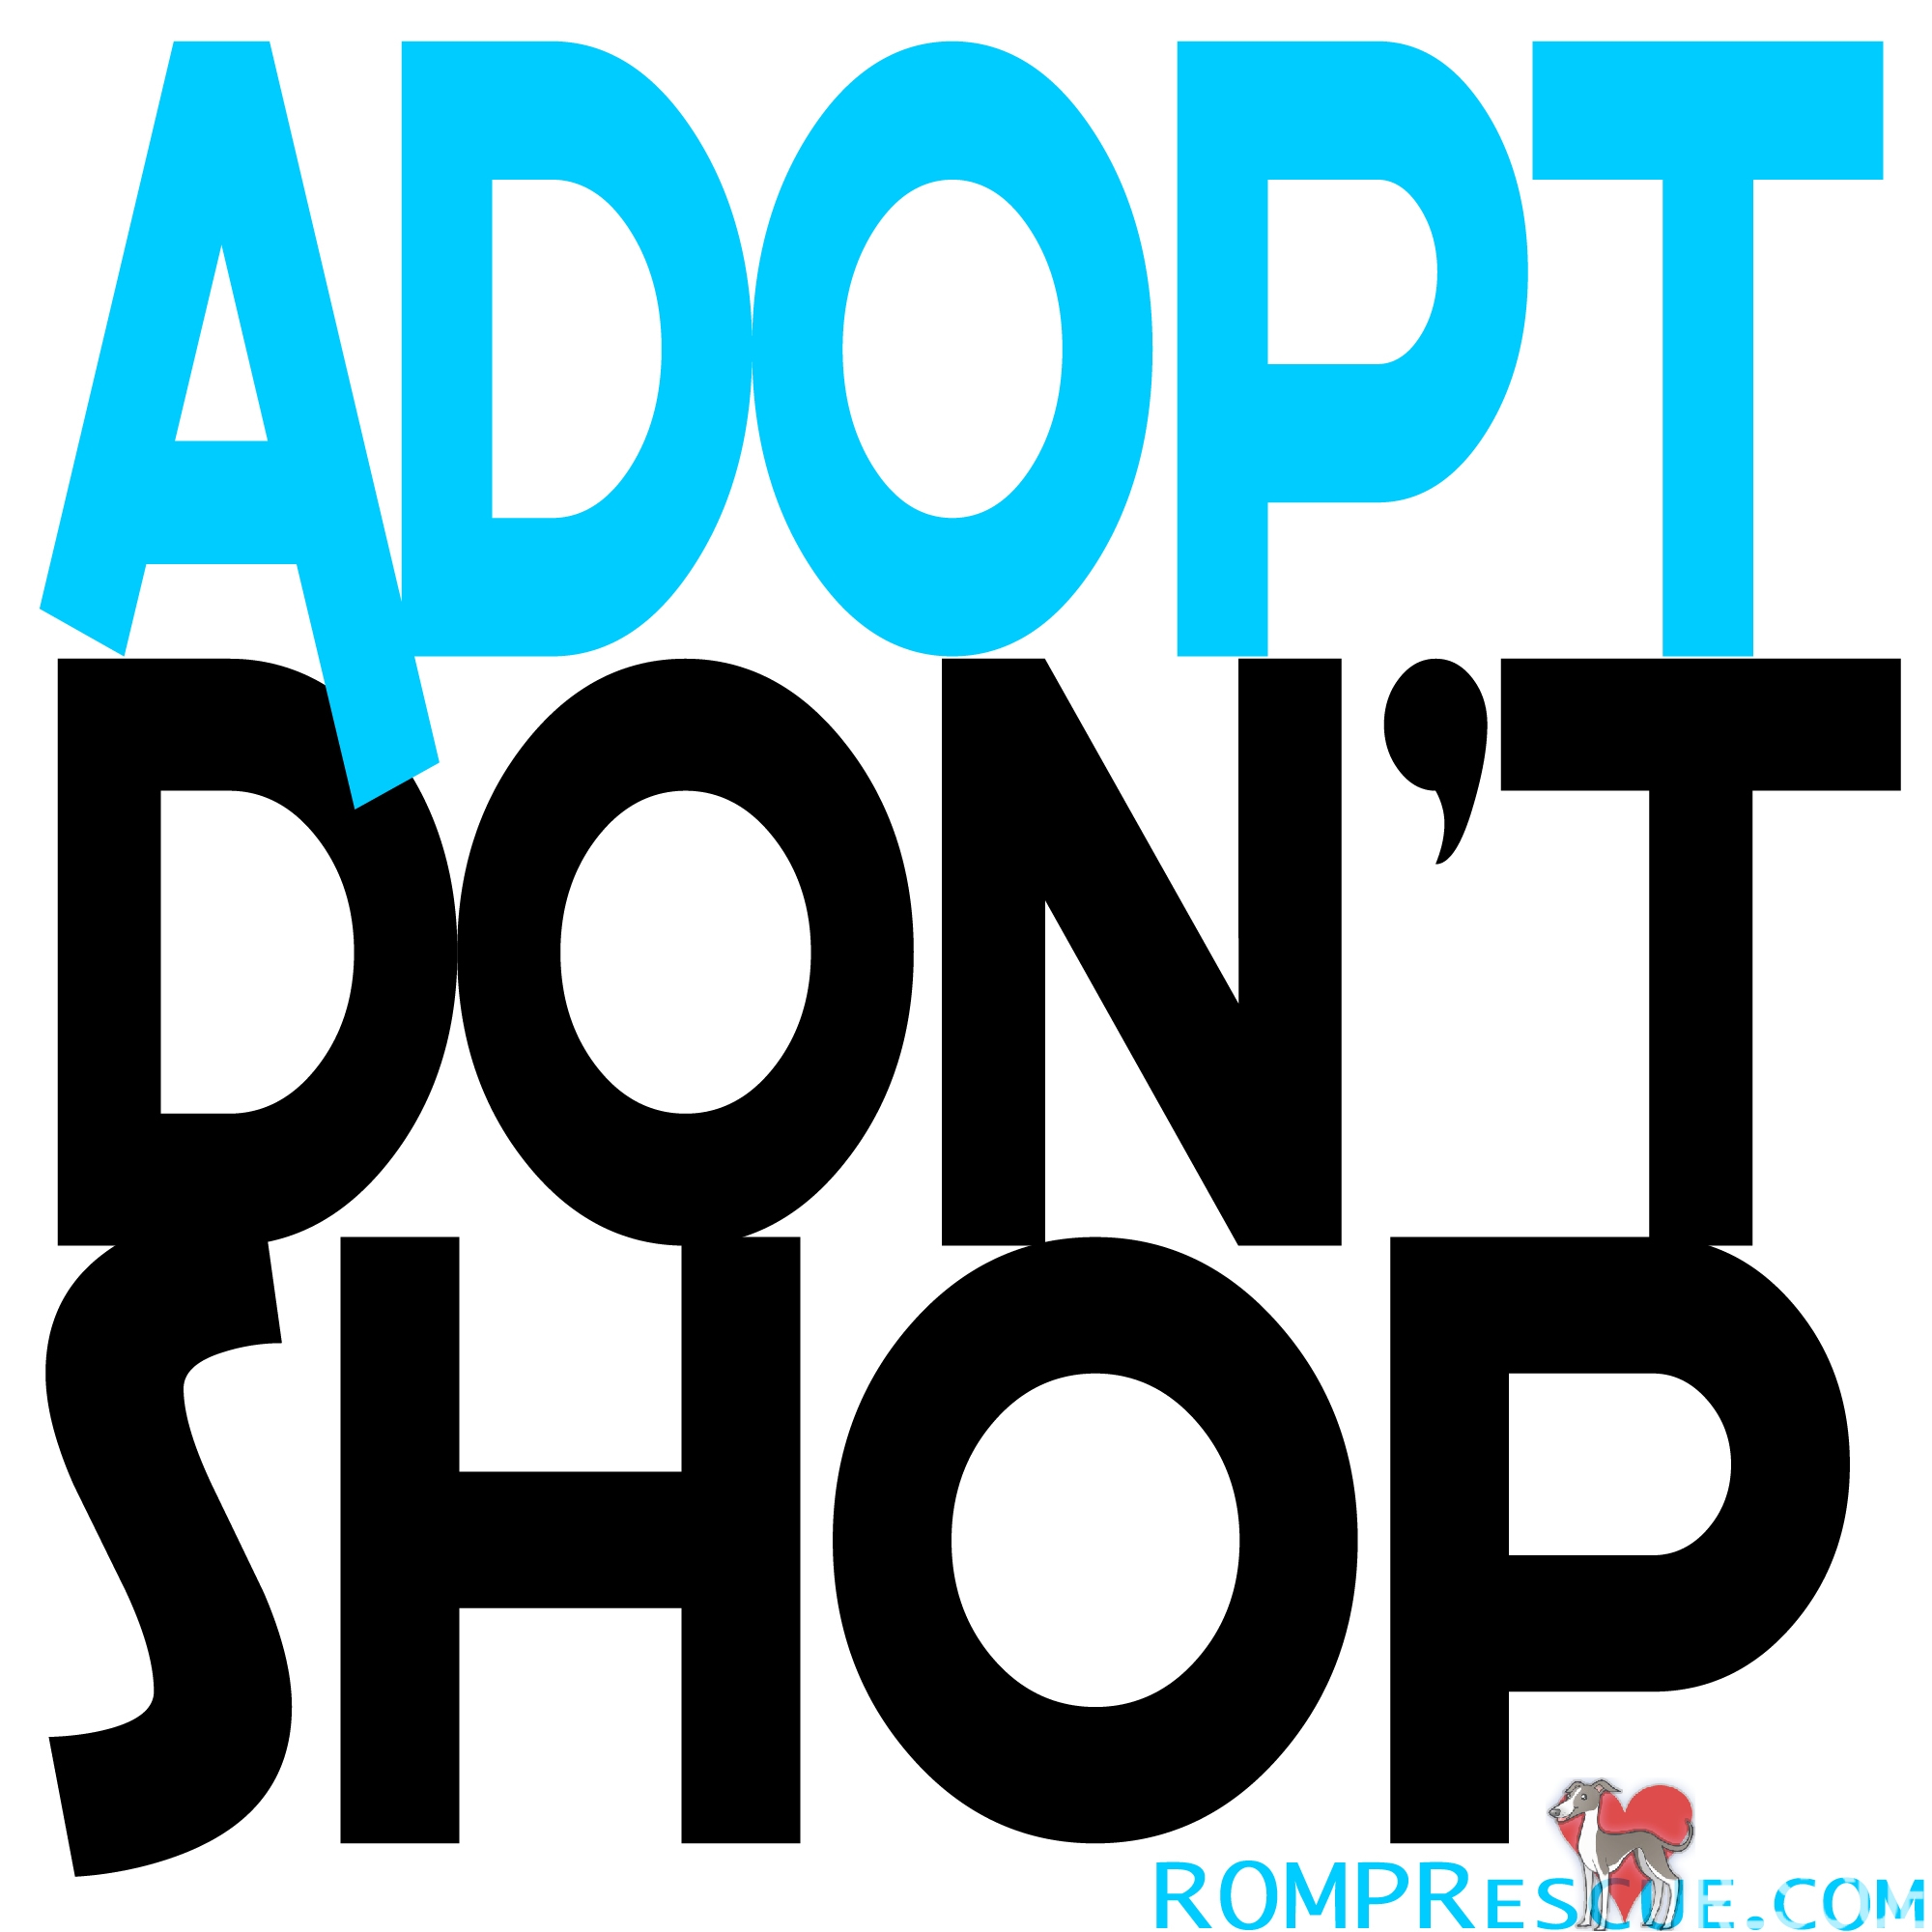 Italian Greyhound Shirts, adopt dont shop shirt, adopt dont shop, romp rescue, pet rescue, dog rescue, animal rescue